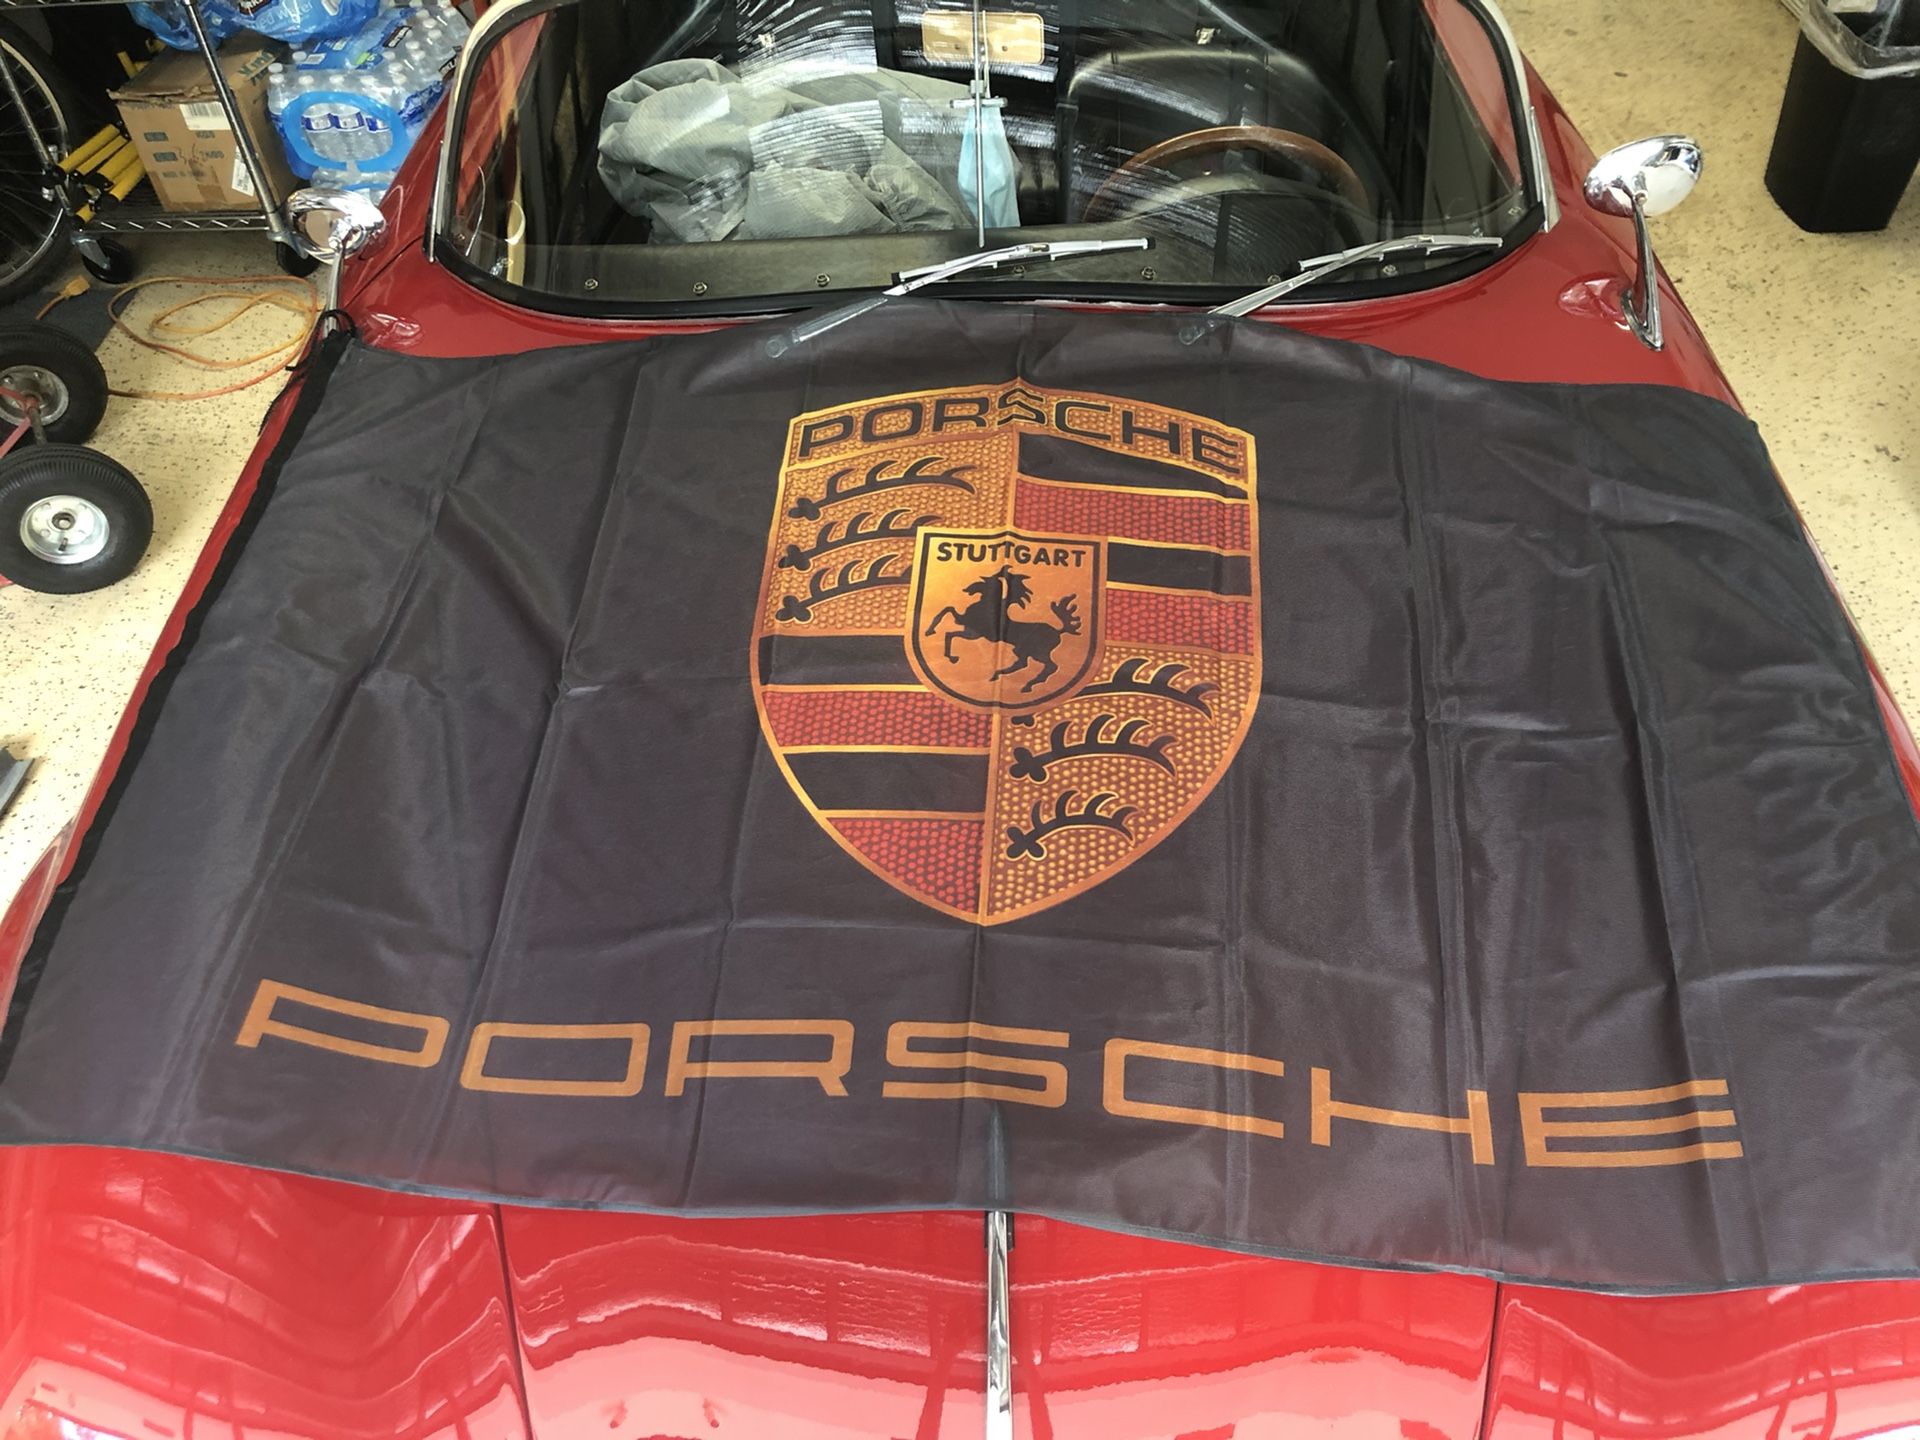 Porsche flag / banner - large 3’ x 5’